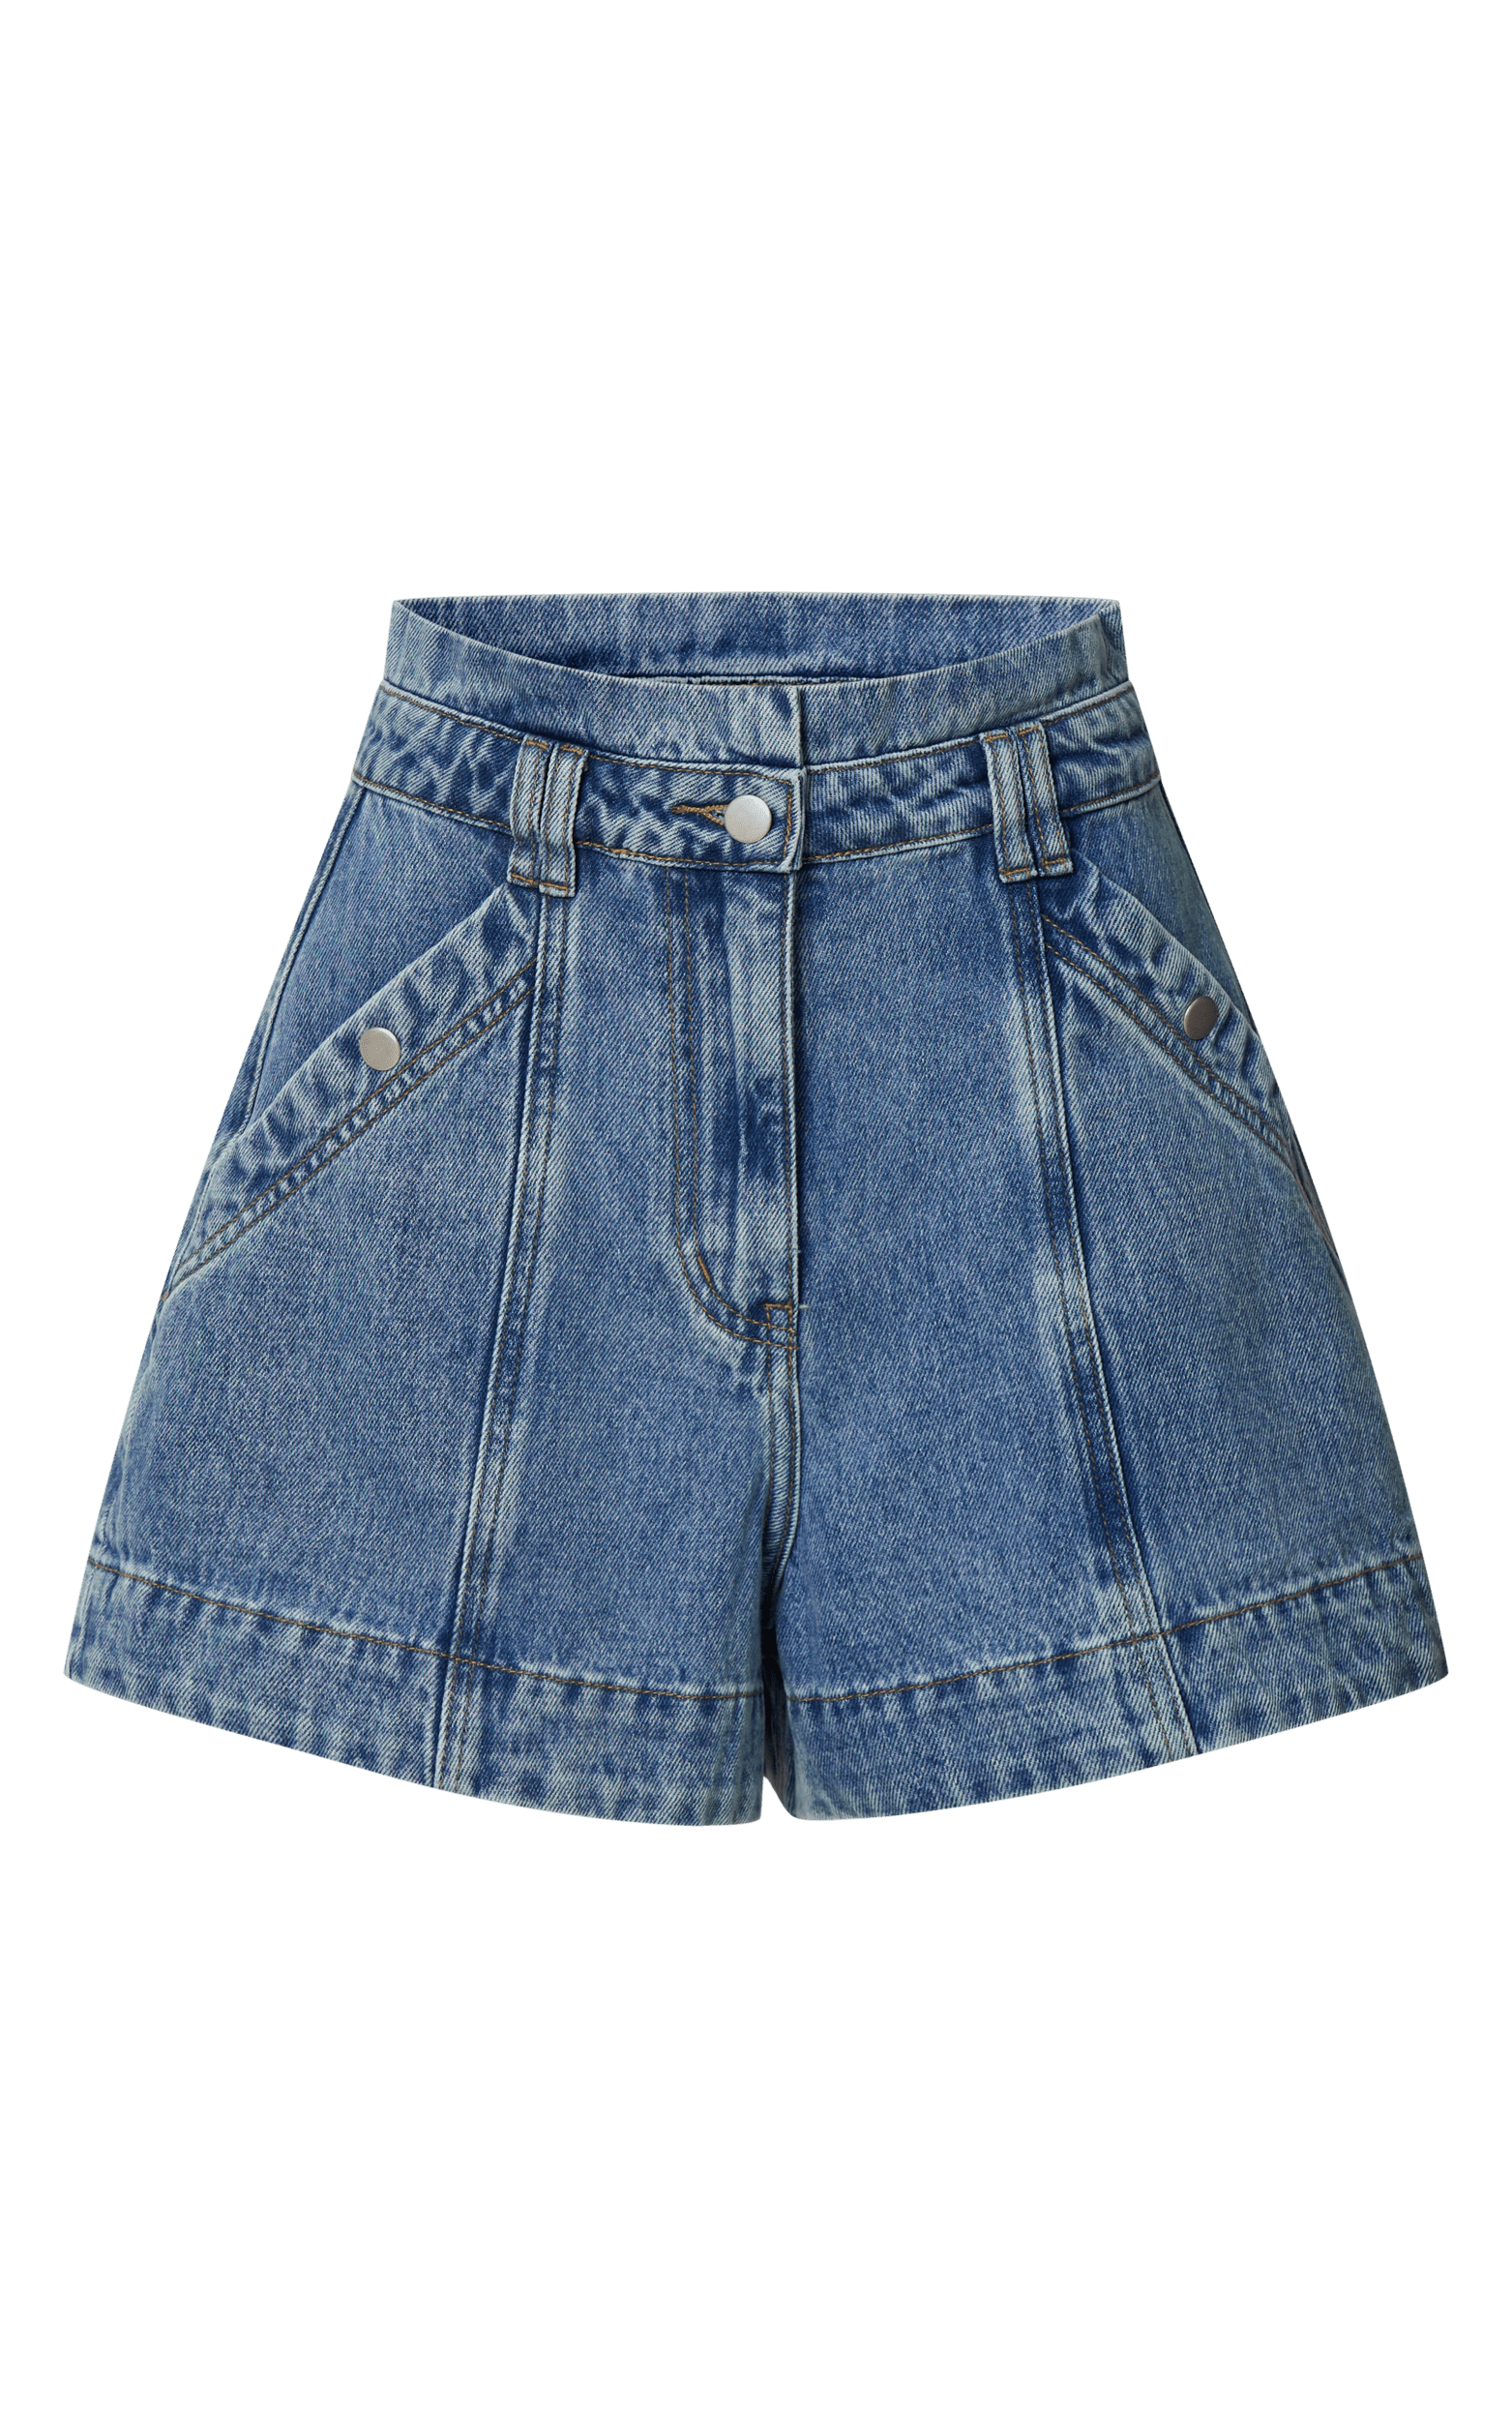 Kayla Denim Shorts - High Waisted A Line Denim Shorts in Mid Blue